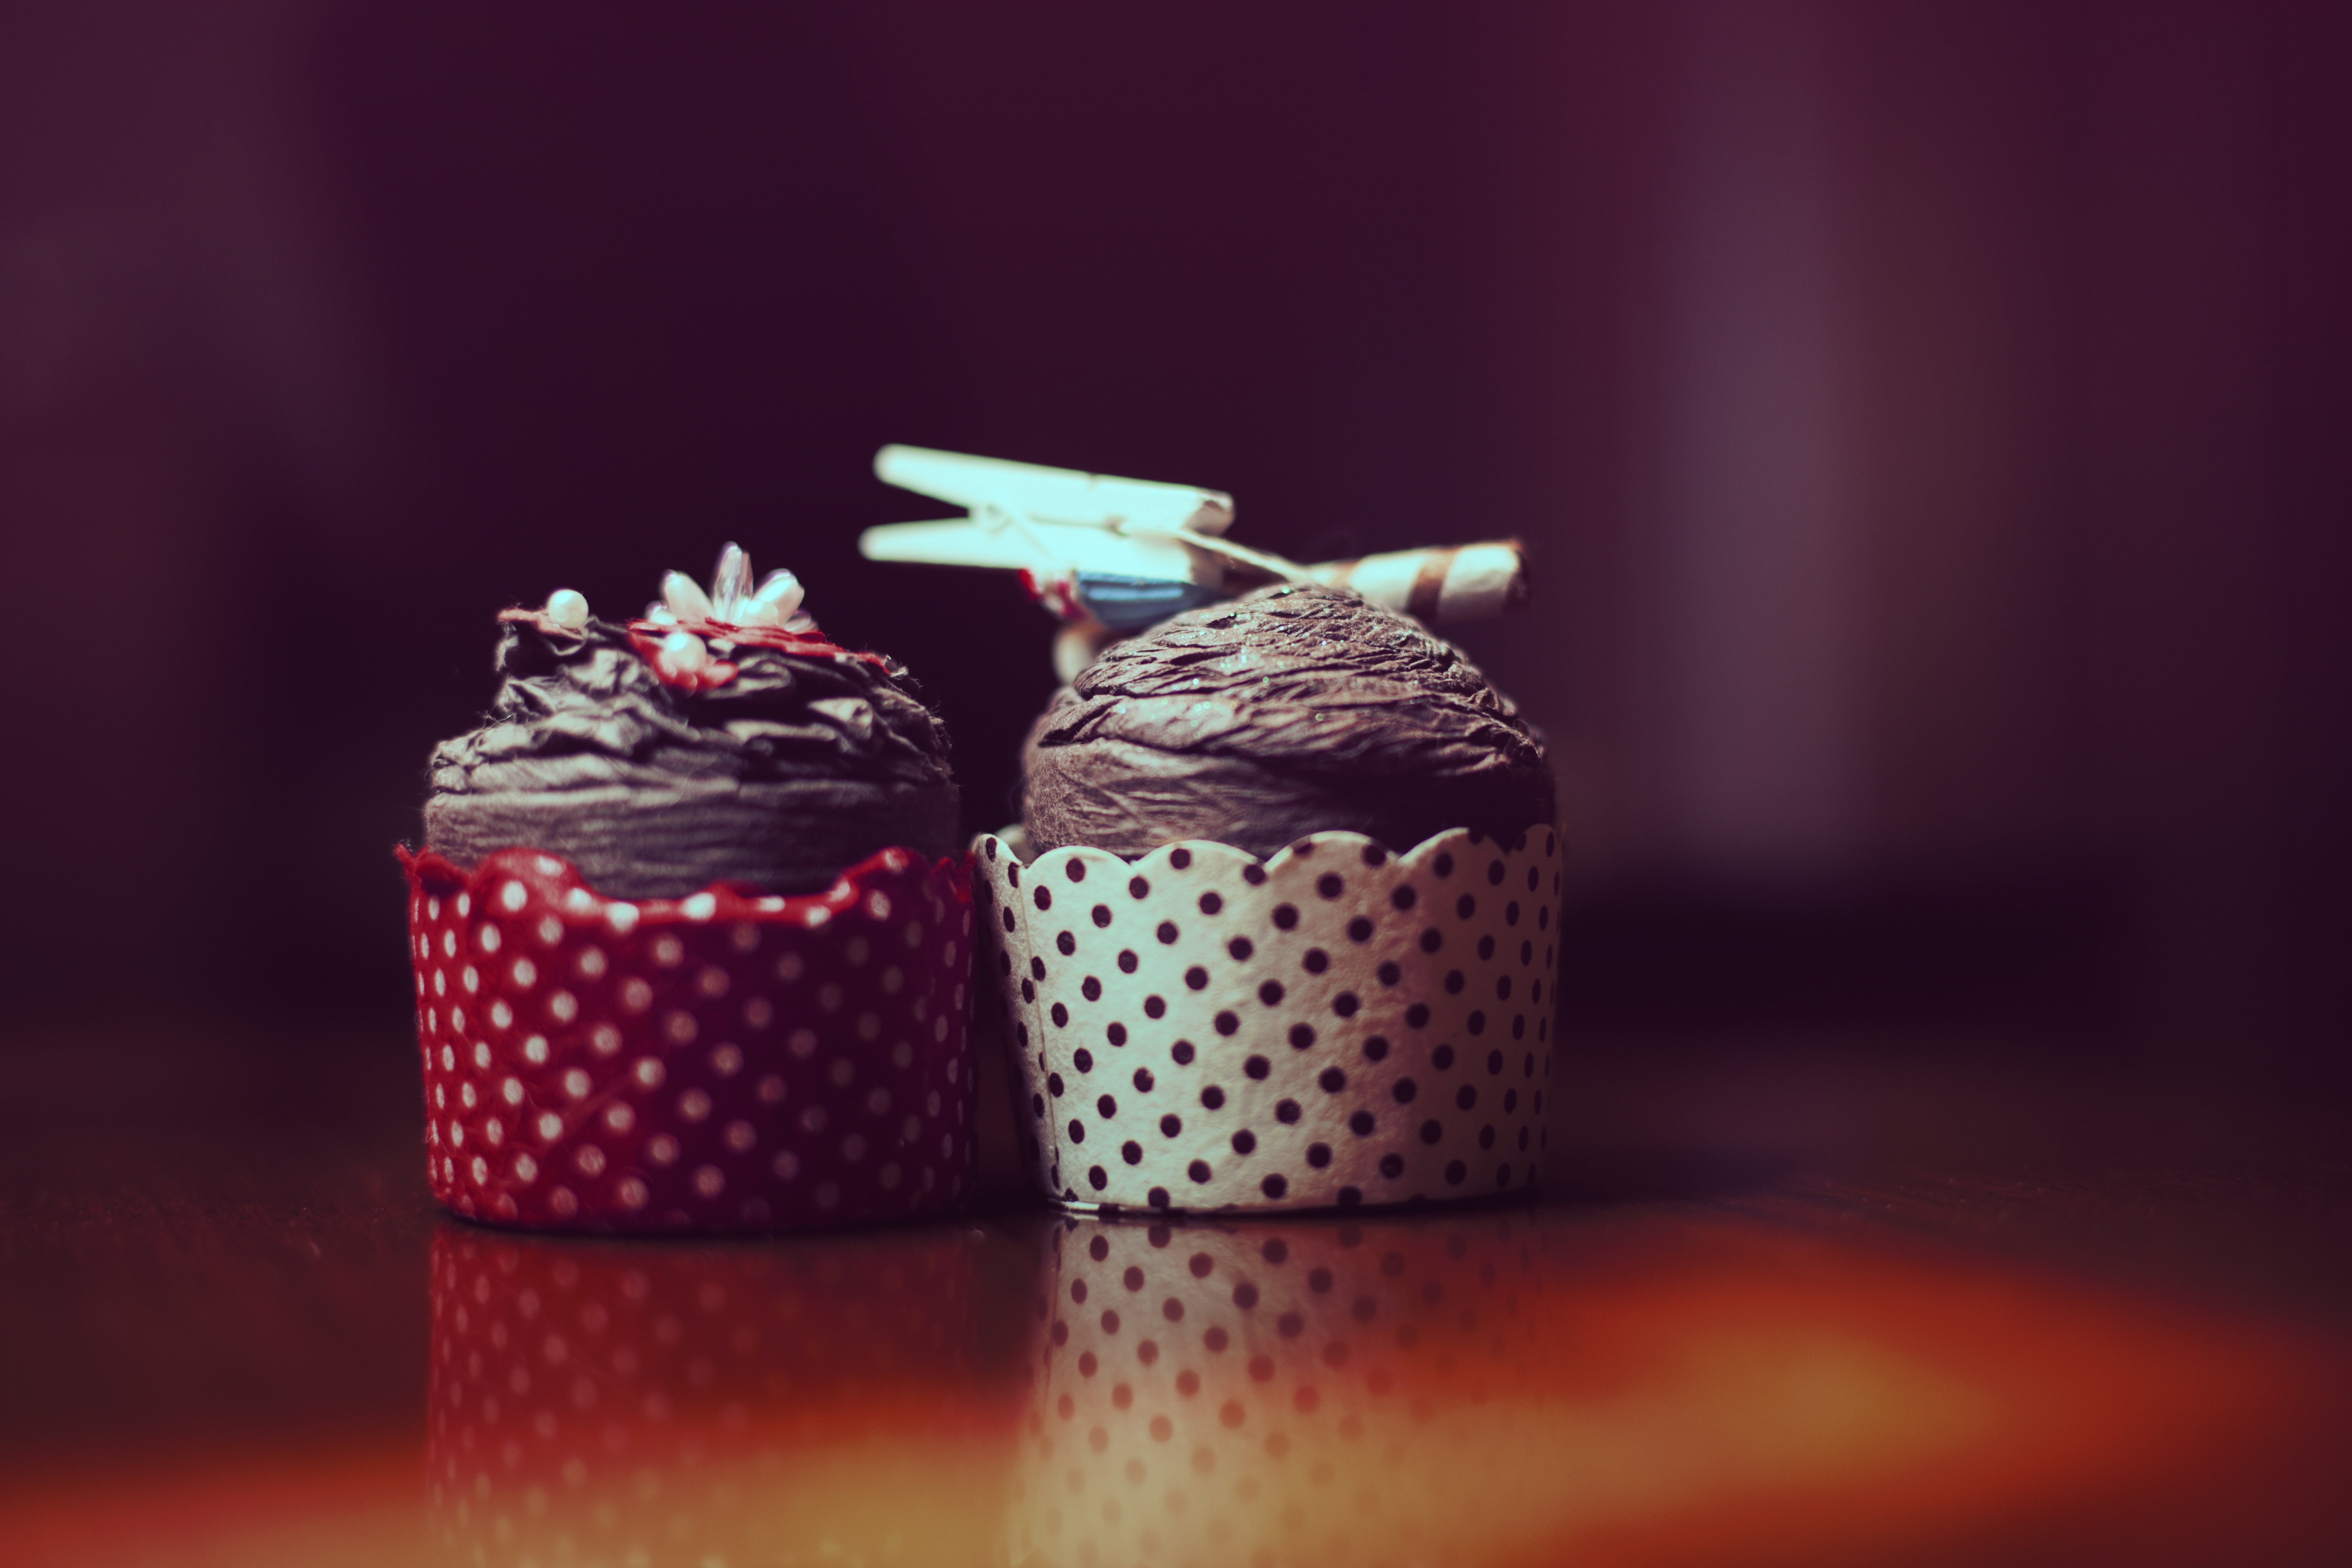 brown and gray cupcake